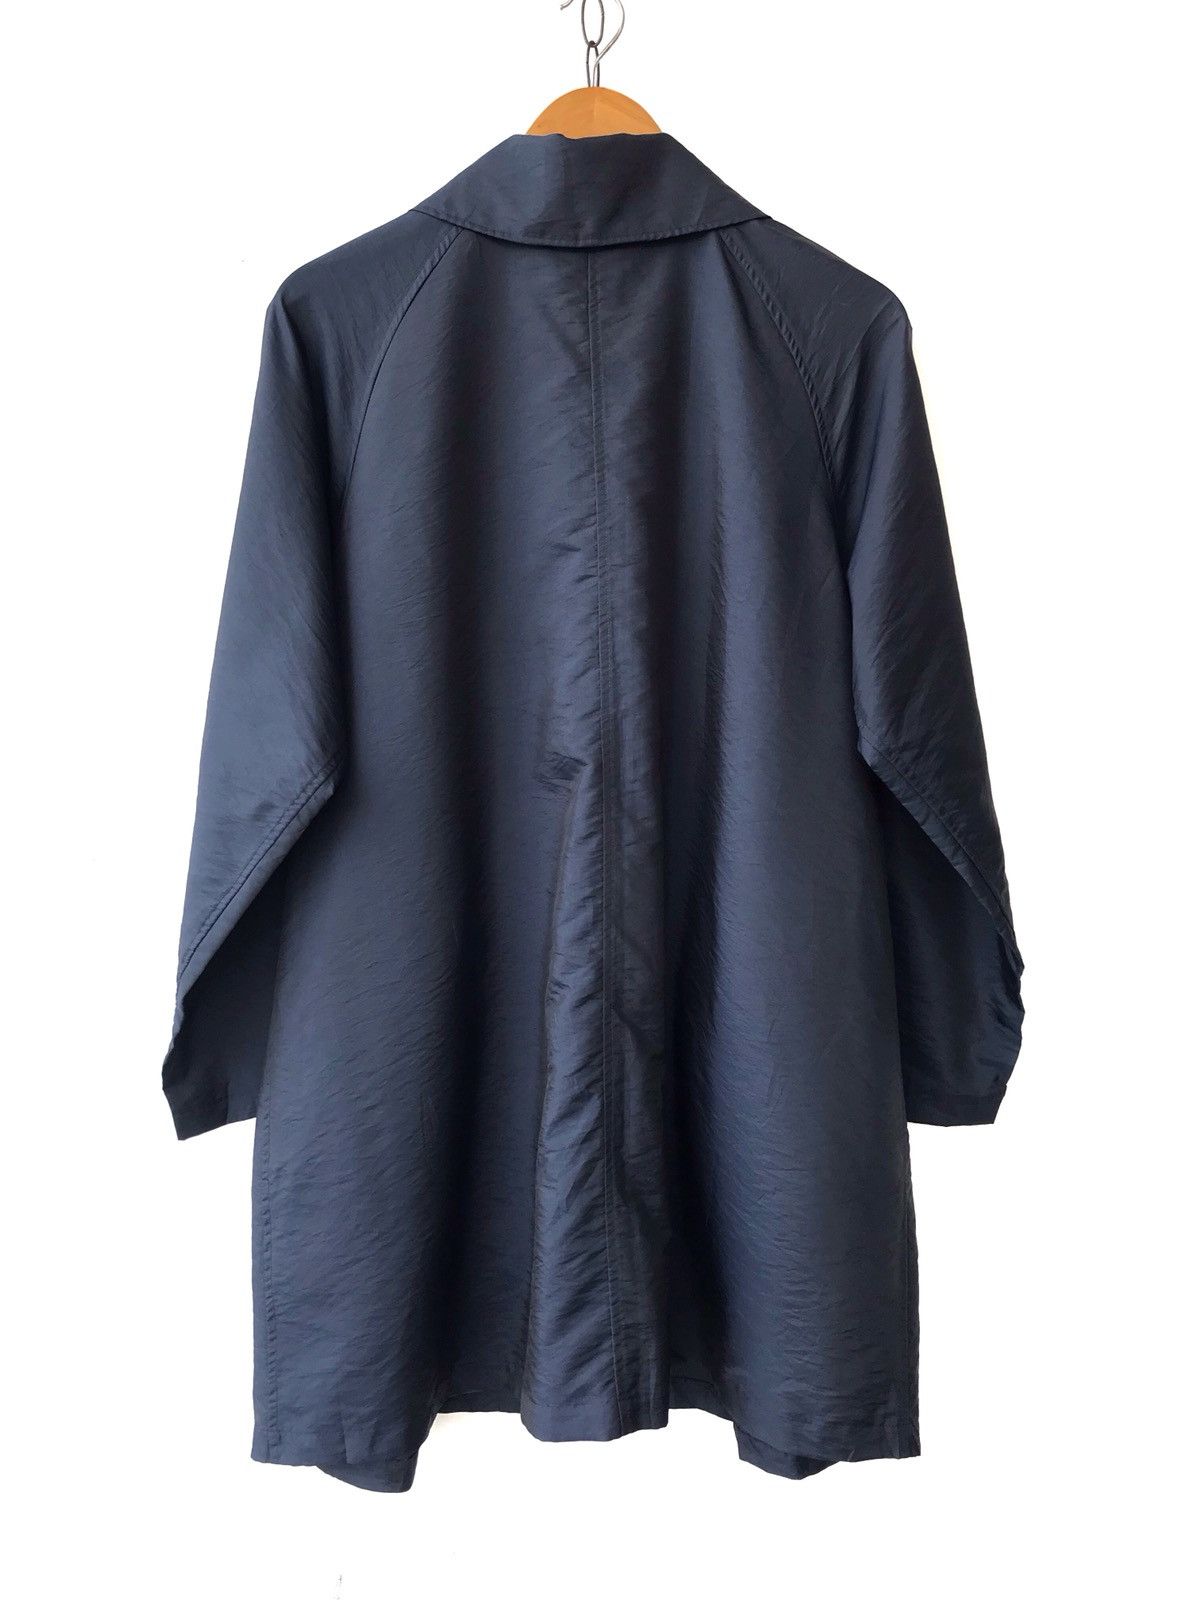 Moschino Cheap and Chic Moschino Ombrelli Nylon Windcoat Size S / US 4 / IT 40 - 6 Thumbnail